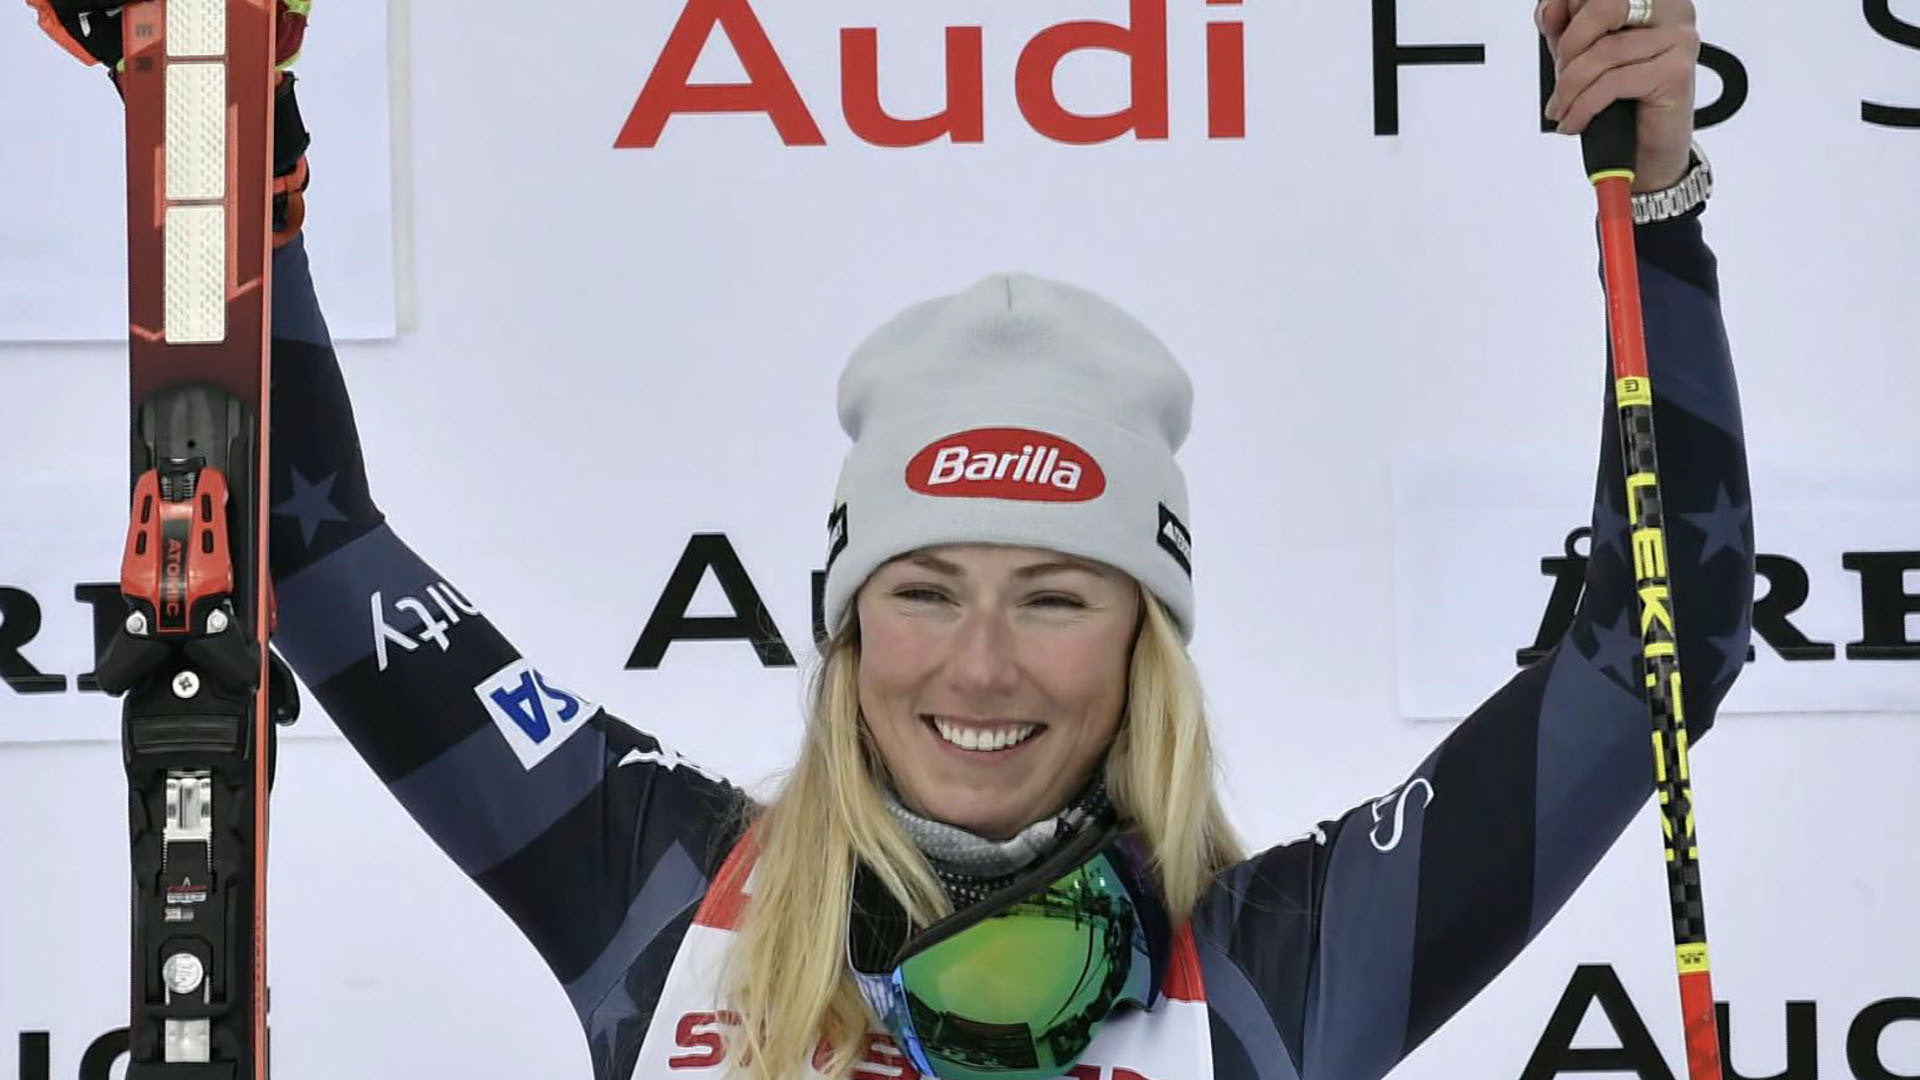 Watch CBS Evening News: Mikaela Shiffrin sets World Cup skiing record ...